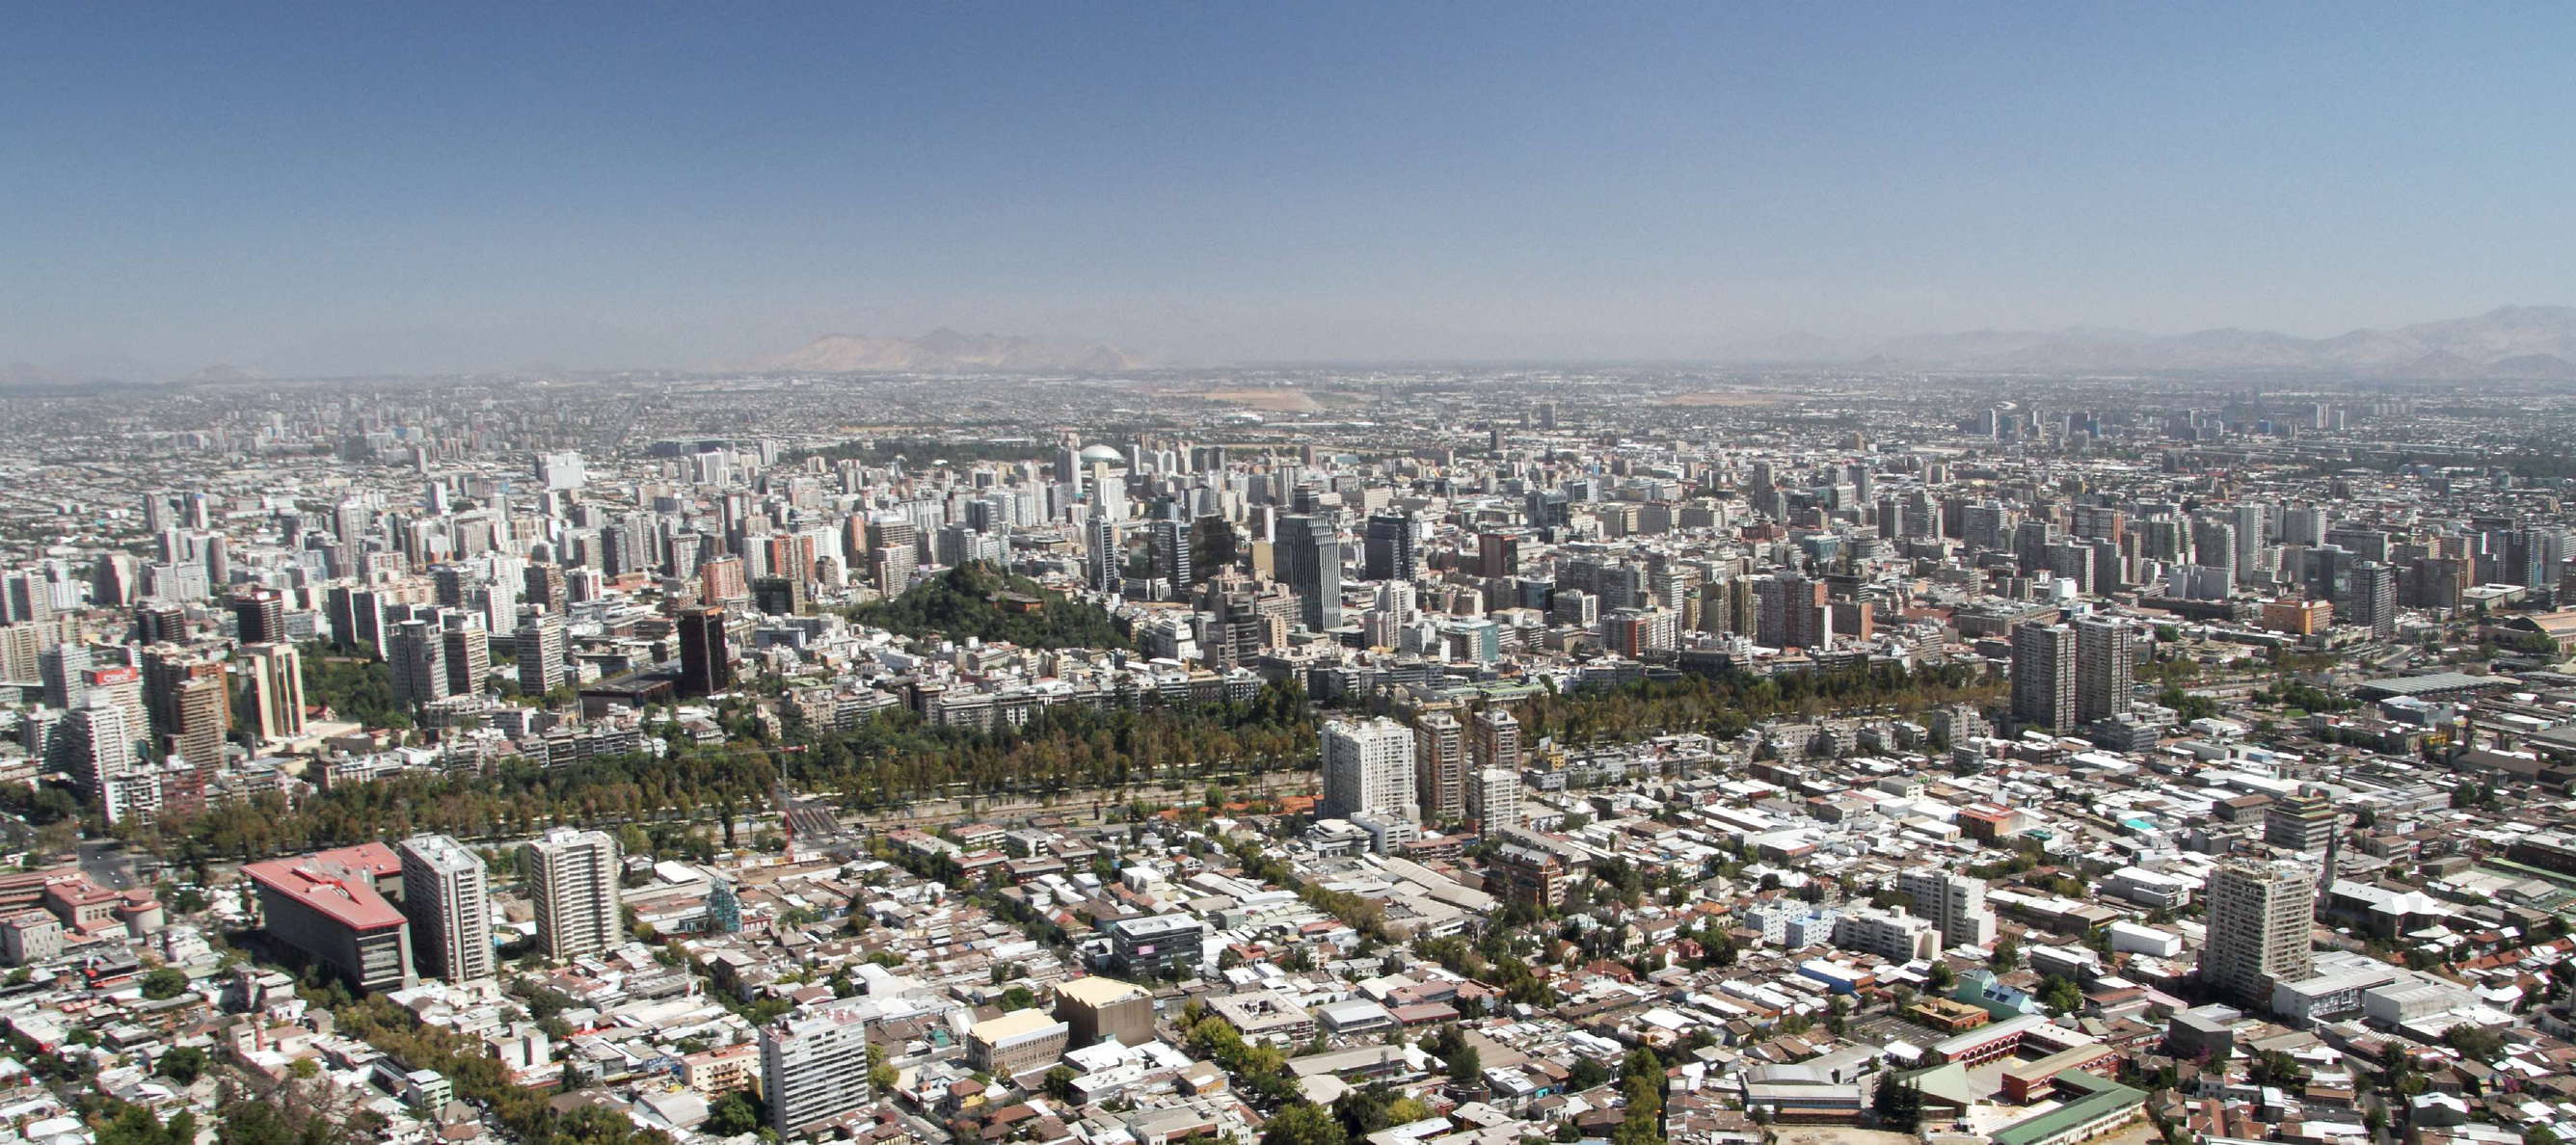 Santiago de Chile | Panoramic view